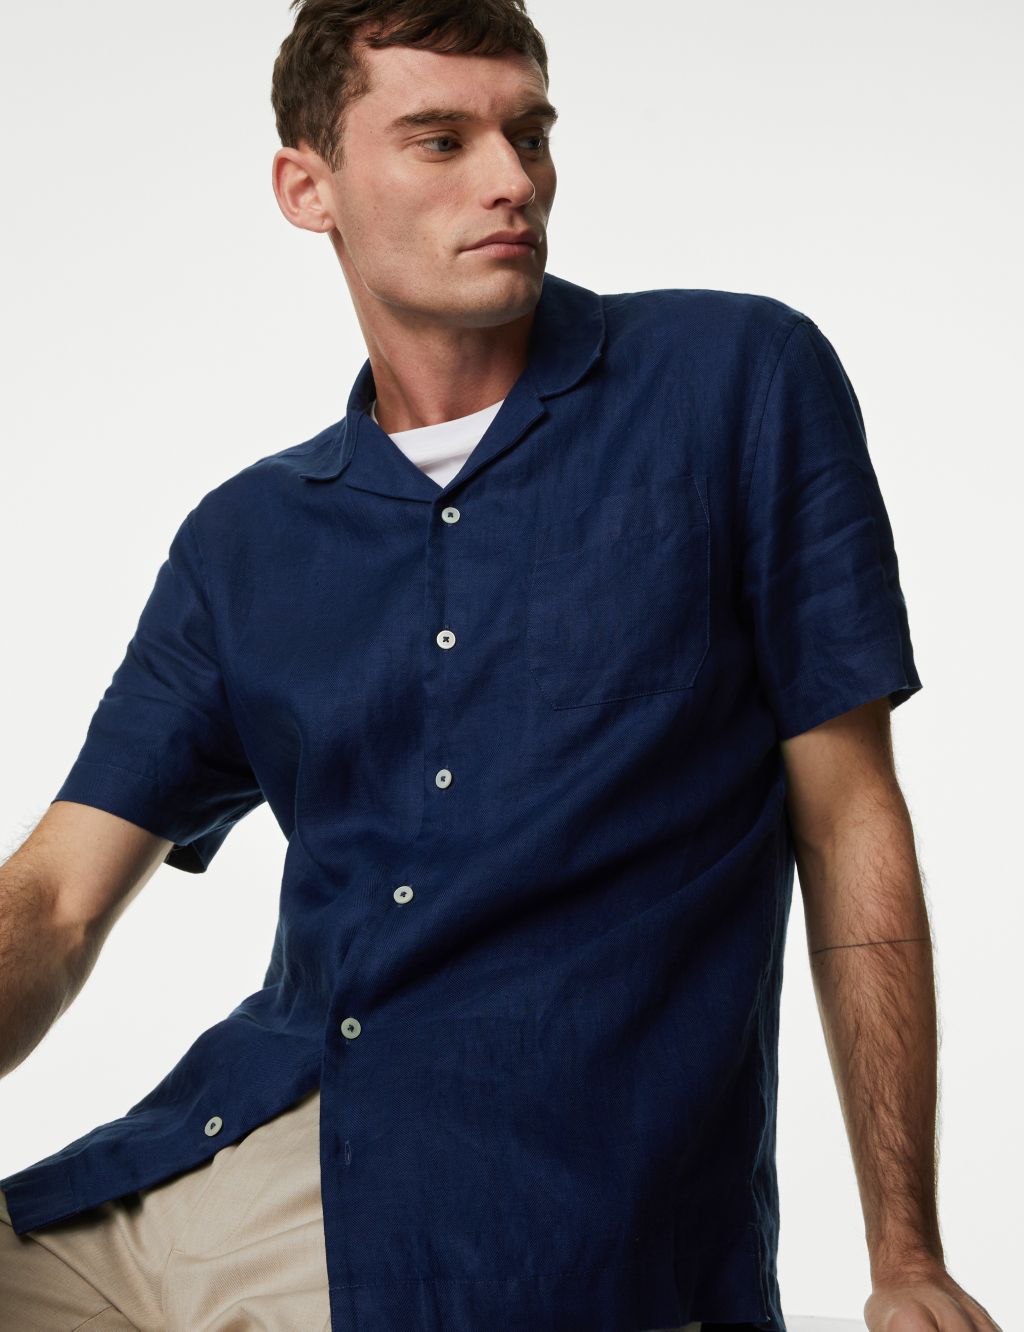 XMMSWDLA Men's Casual Stylish Short Sleeve Button-Up Striped Dress Shirts  Cotton Beach Shirts Wine Beach Shirts for Men